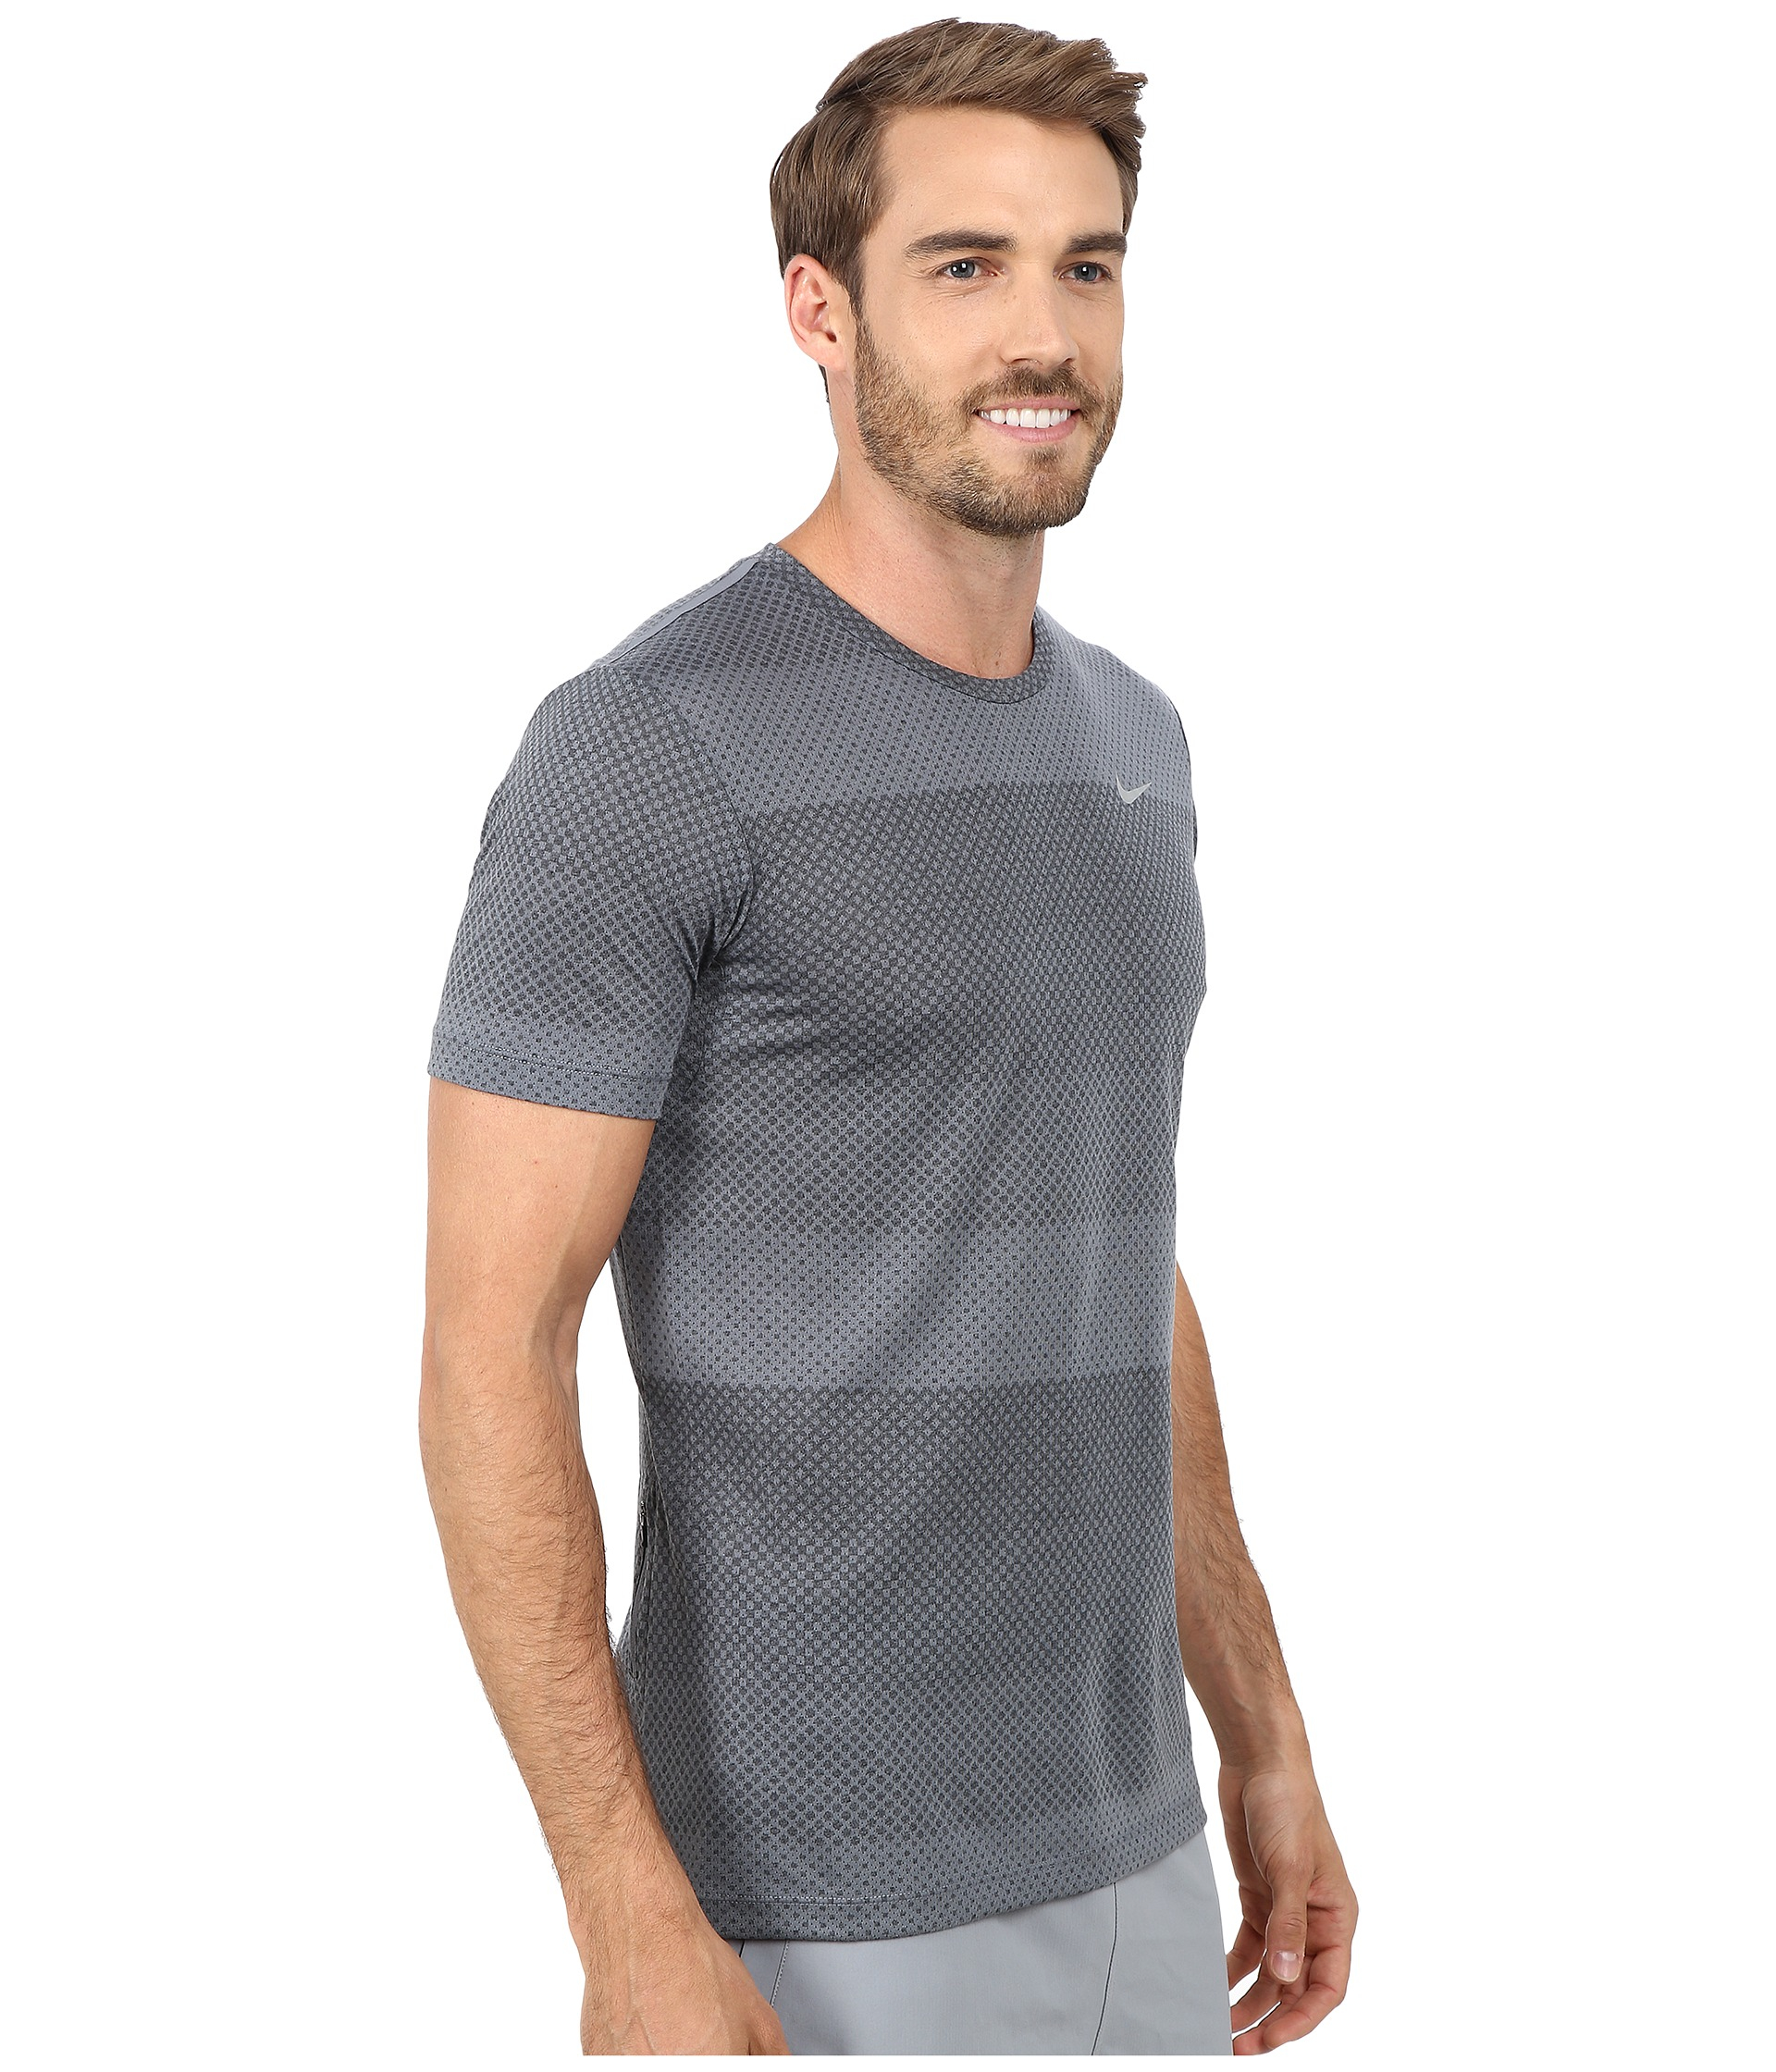 Nike Dri-fit Cool Tailwind Stripe Shirt in Gray for Men - Lyst